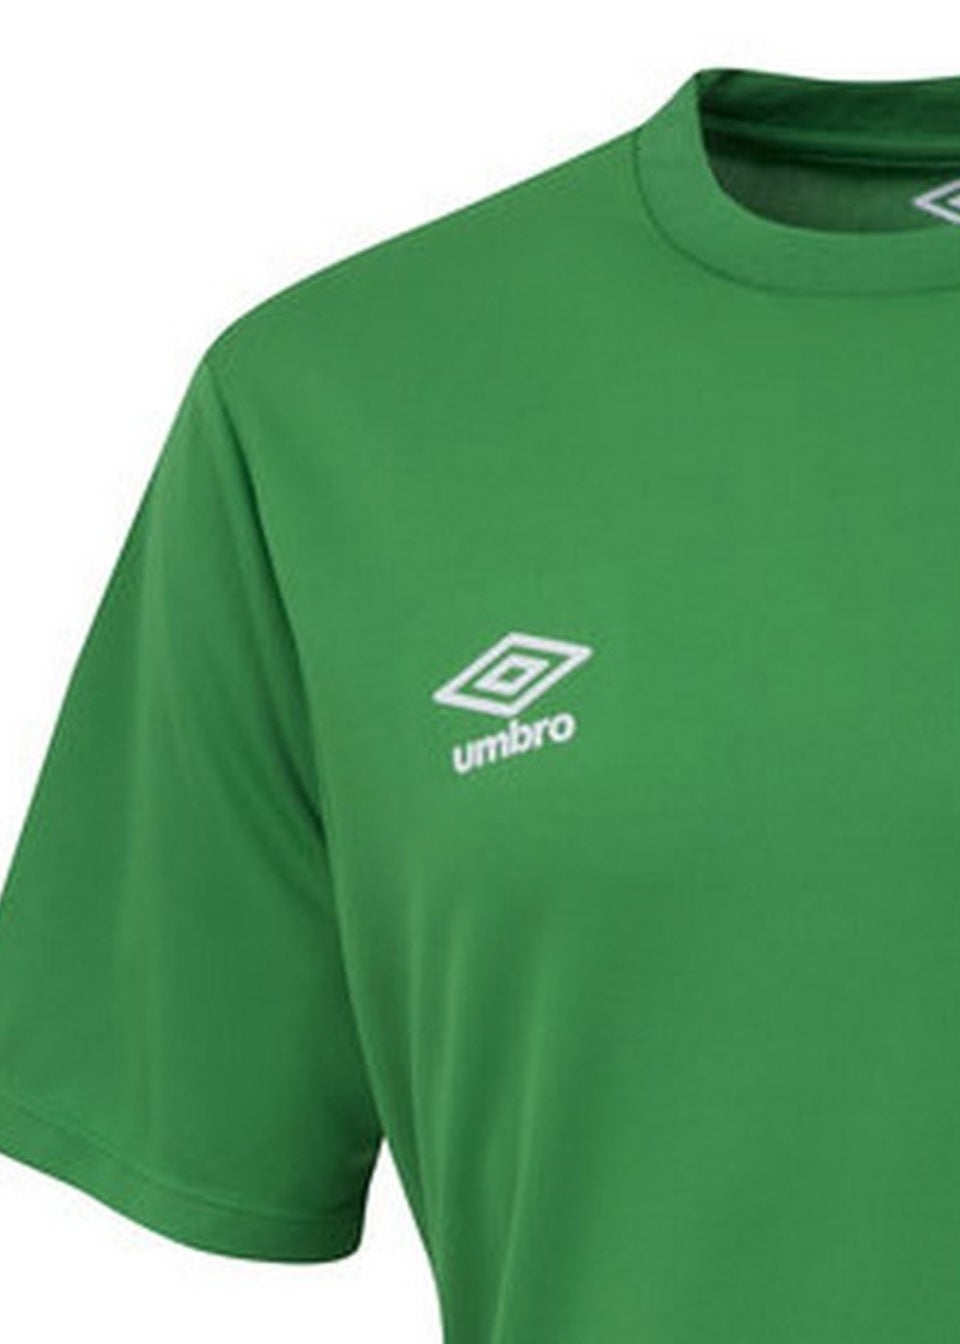 Umbro Emerald Club Short-Sleeved Jersey